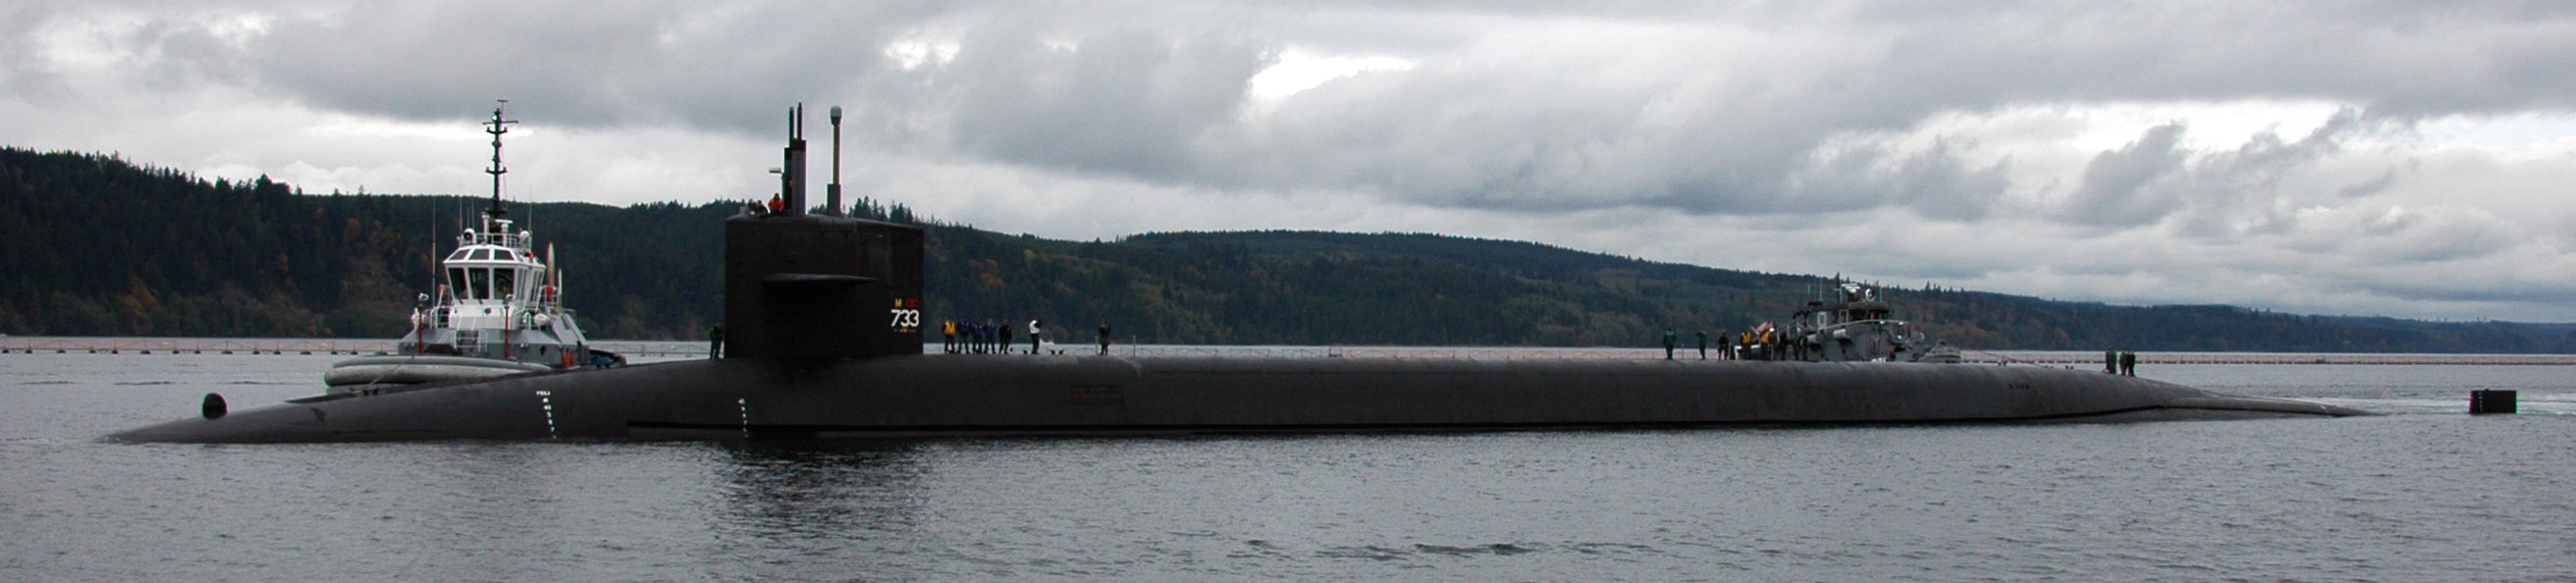 ssbn-733 uss nevada ohio class ballistic missile submarine 2012 10 naval base kitsap bangor washington